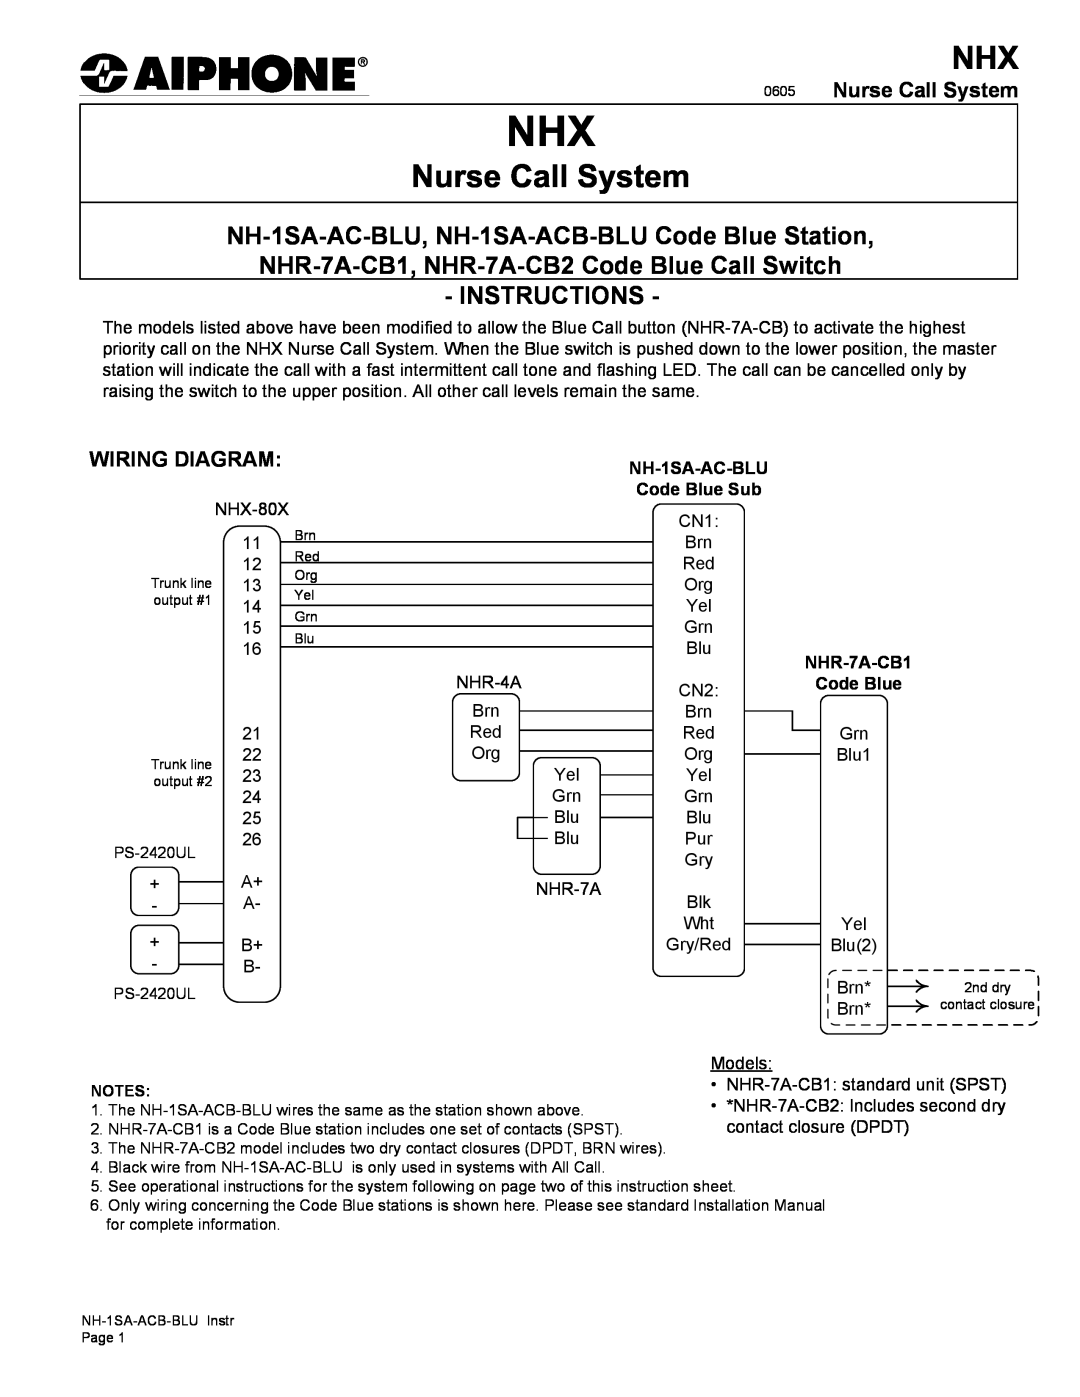 Aiphone instruction sheet Nurse Call System, Wiring Diagram, NH-1SA-AC-BLU, NH-1SA-ACB-BLU Code Blue Station 